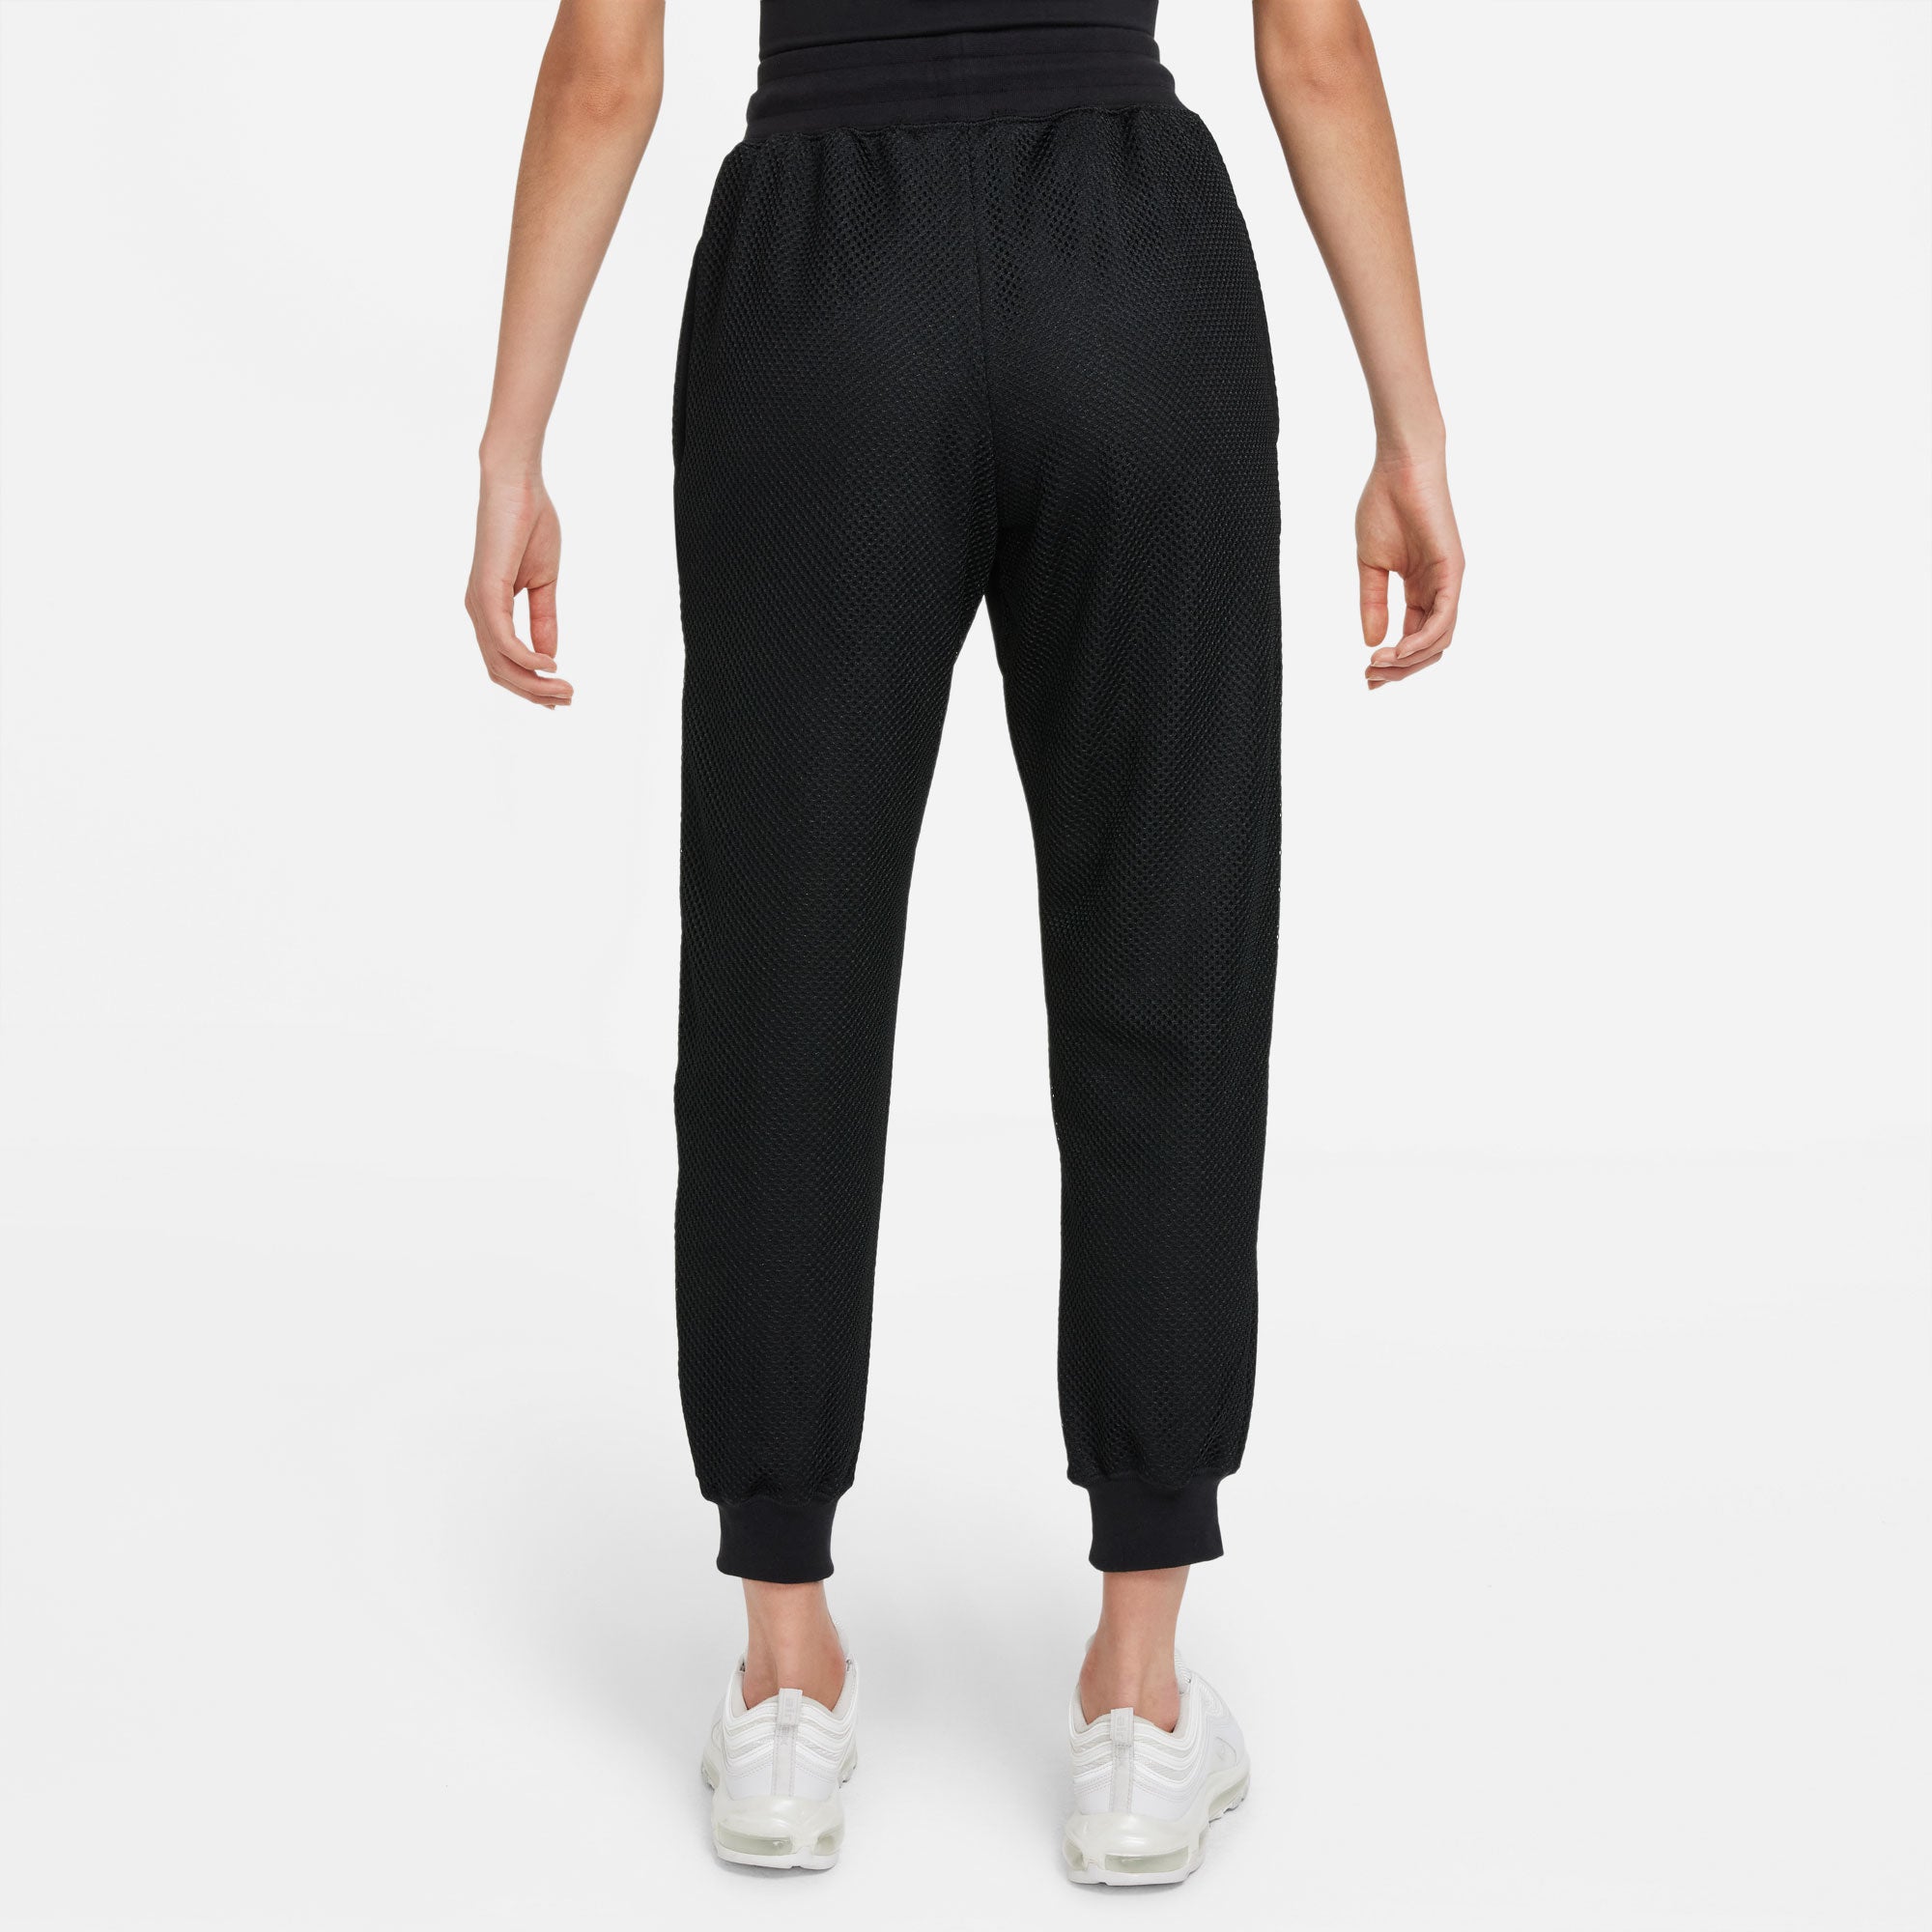 NikeCourt SDC Women's Fleece Tennis Pants Black (2)